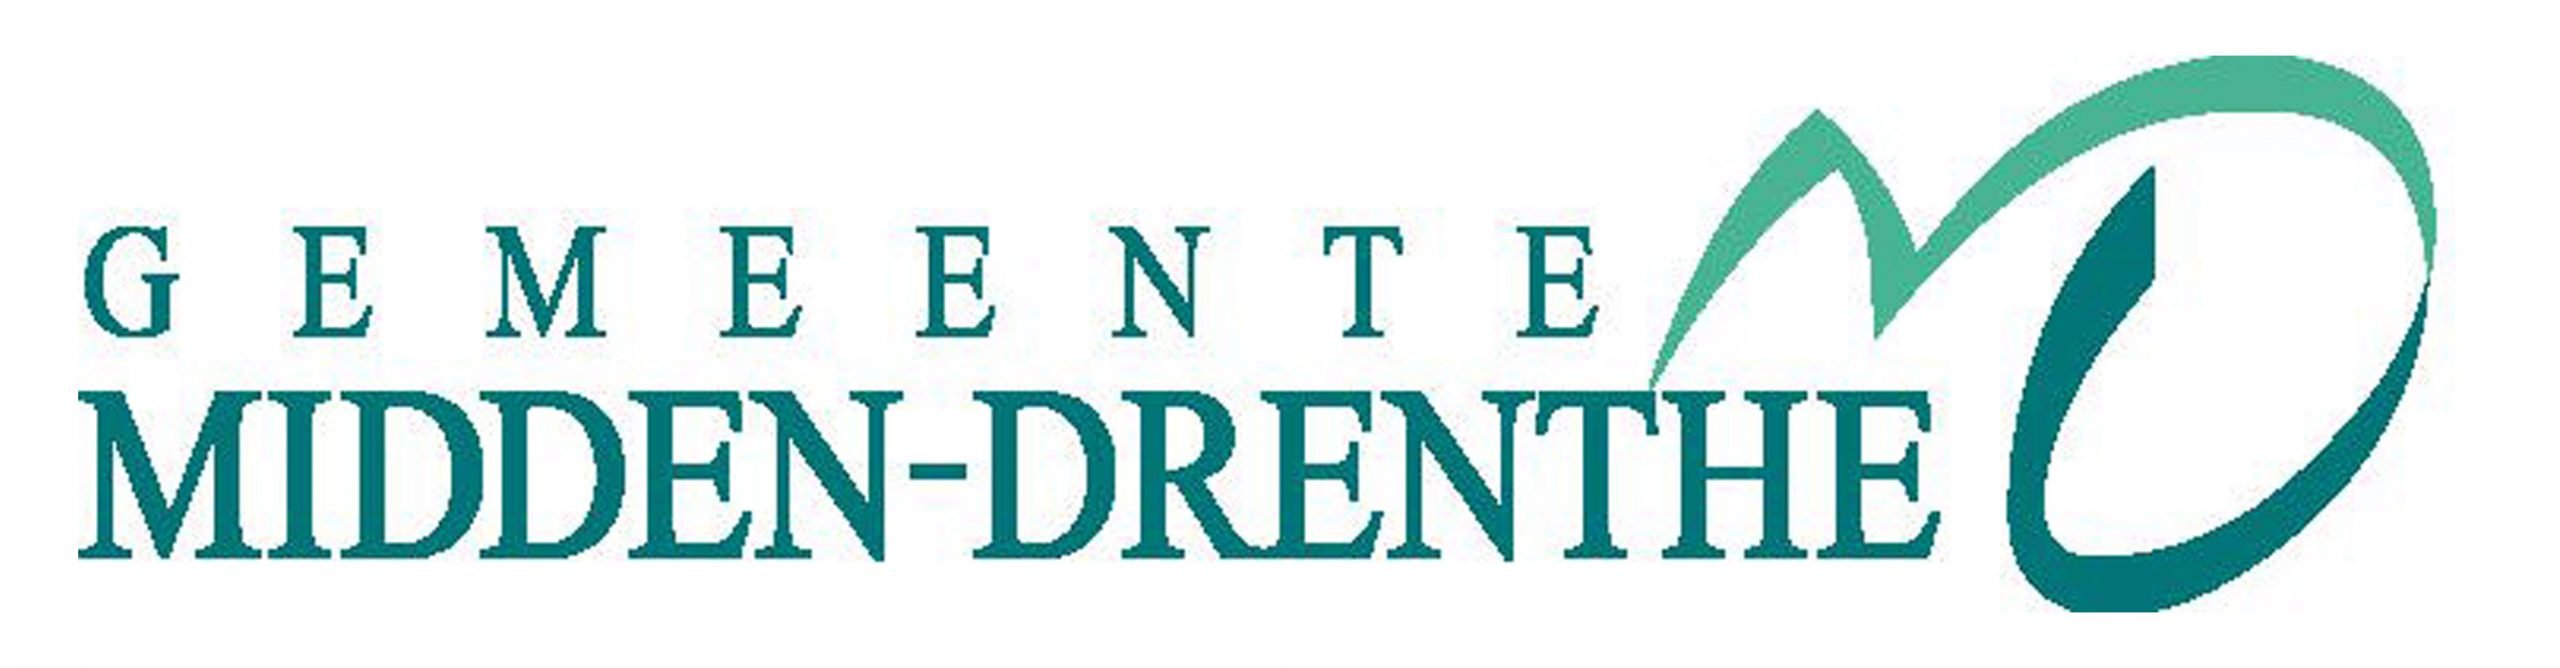 Gemeente Midden-Drenthe logo